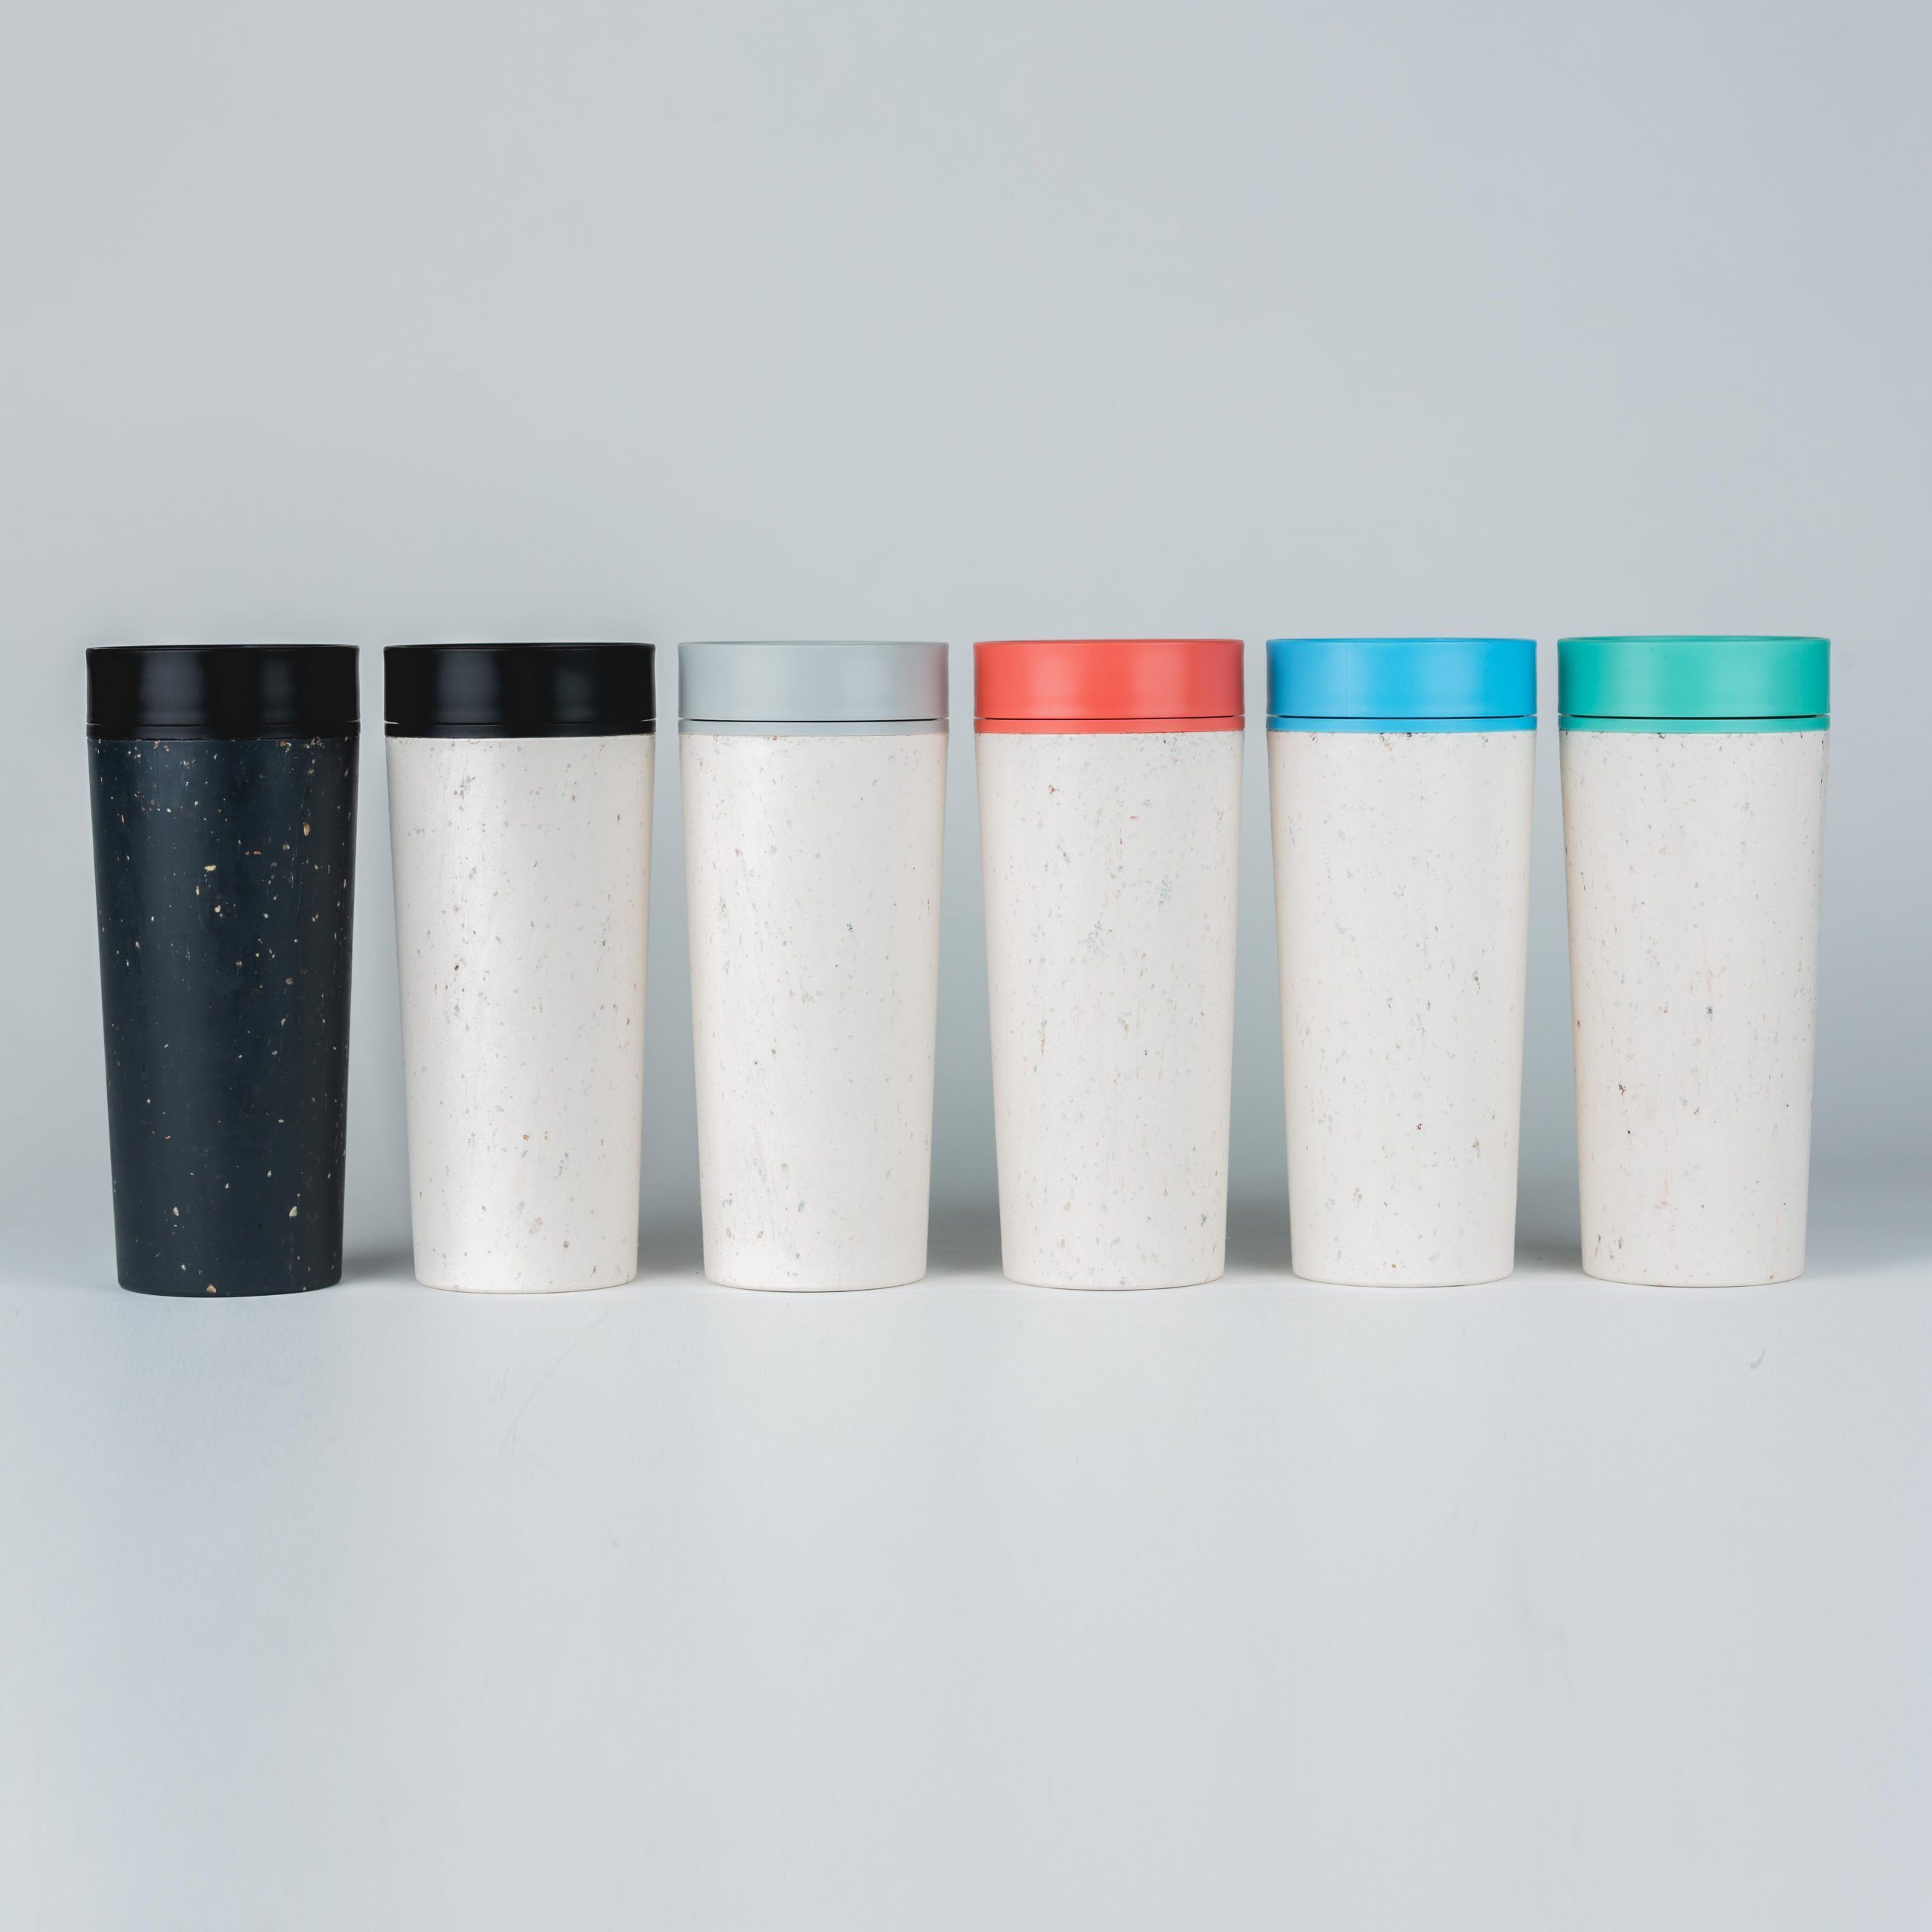 Large Zero Waste Mug Reusable Coffee Cup by Onya Travel Mug 12 oz, Purple